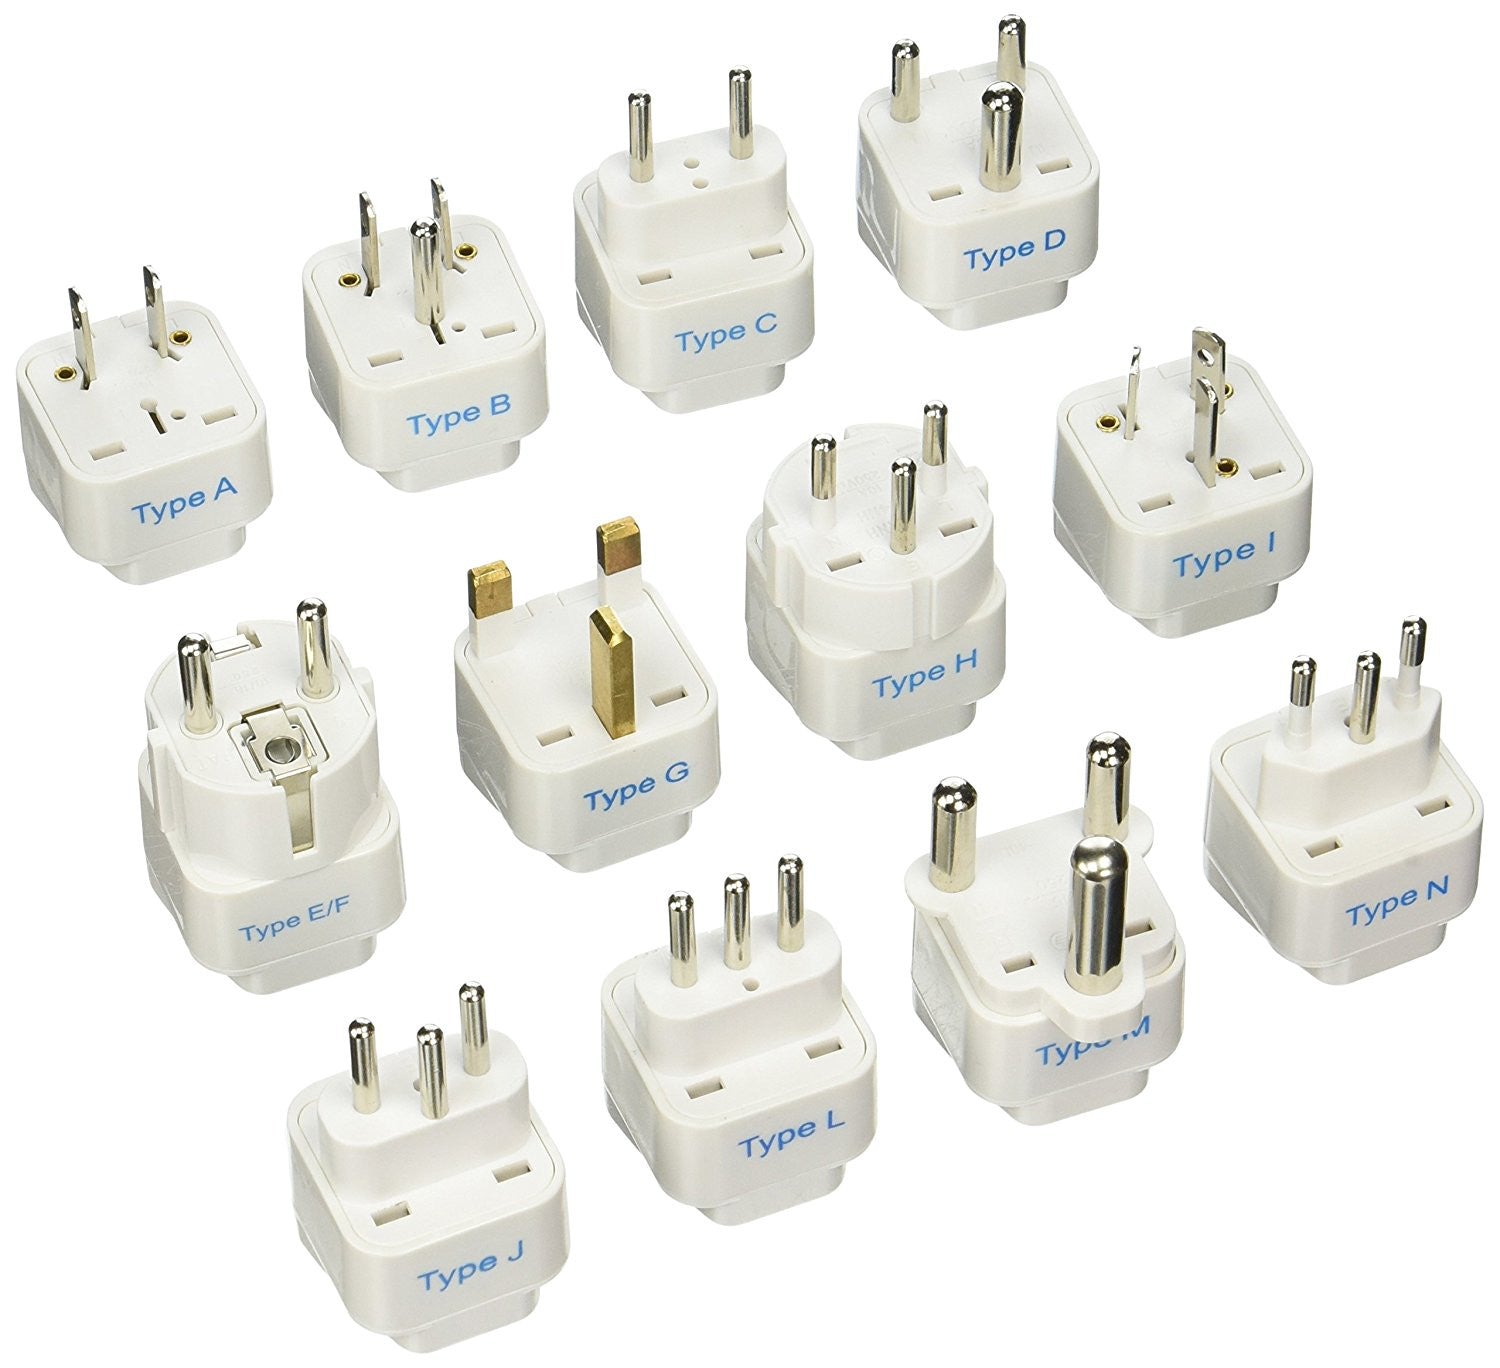 International Plug Adapter Set Grounded Adapter – Ceptics